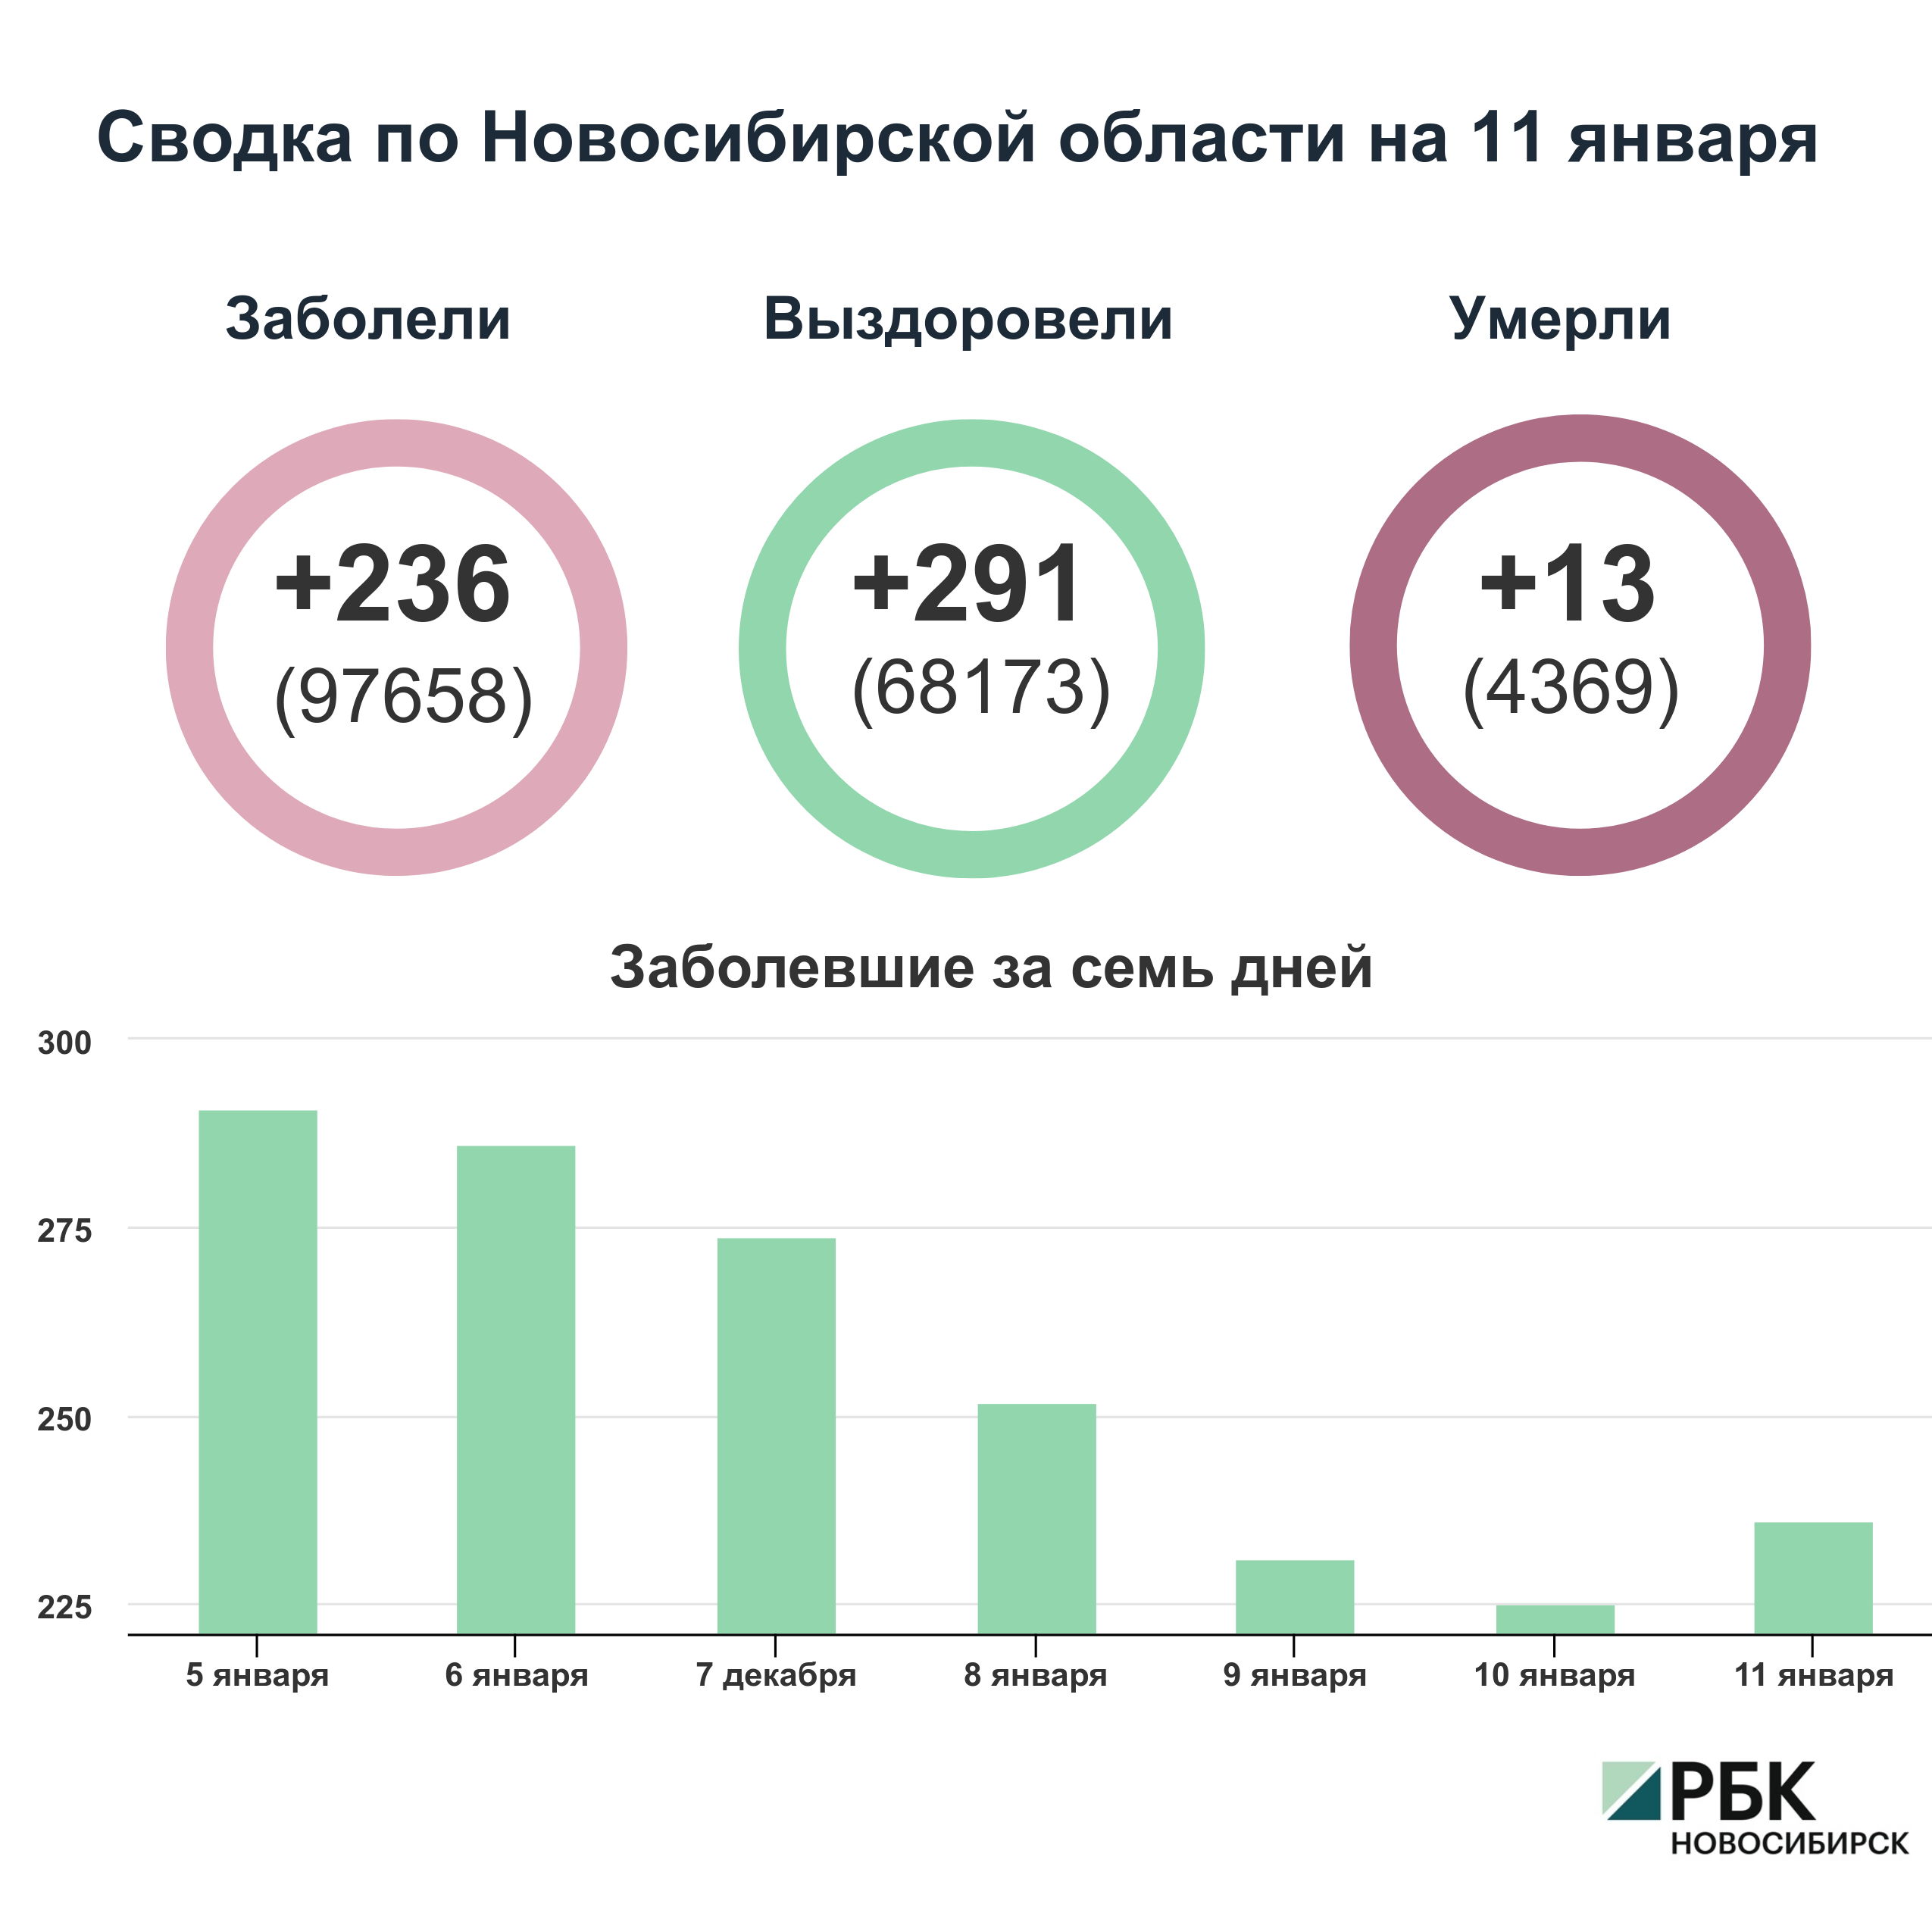 Коронавирус в Новосибирске: сводка на 11 января